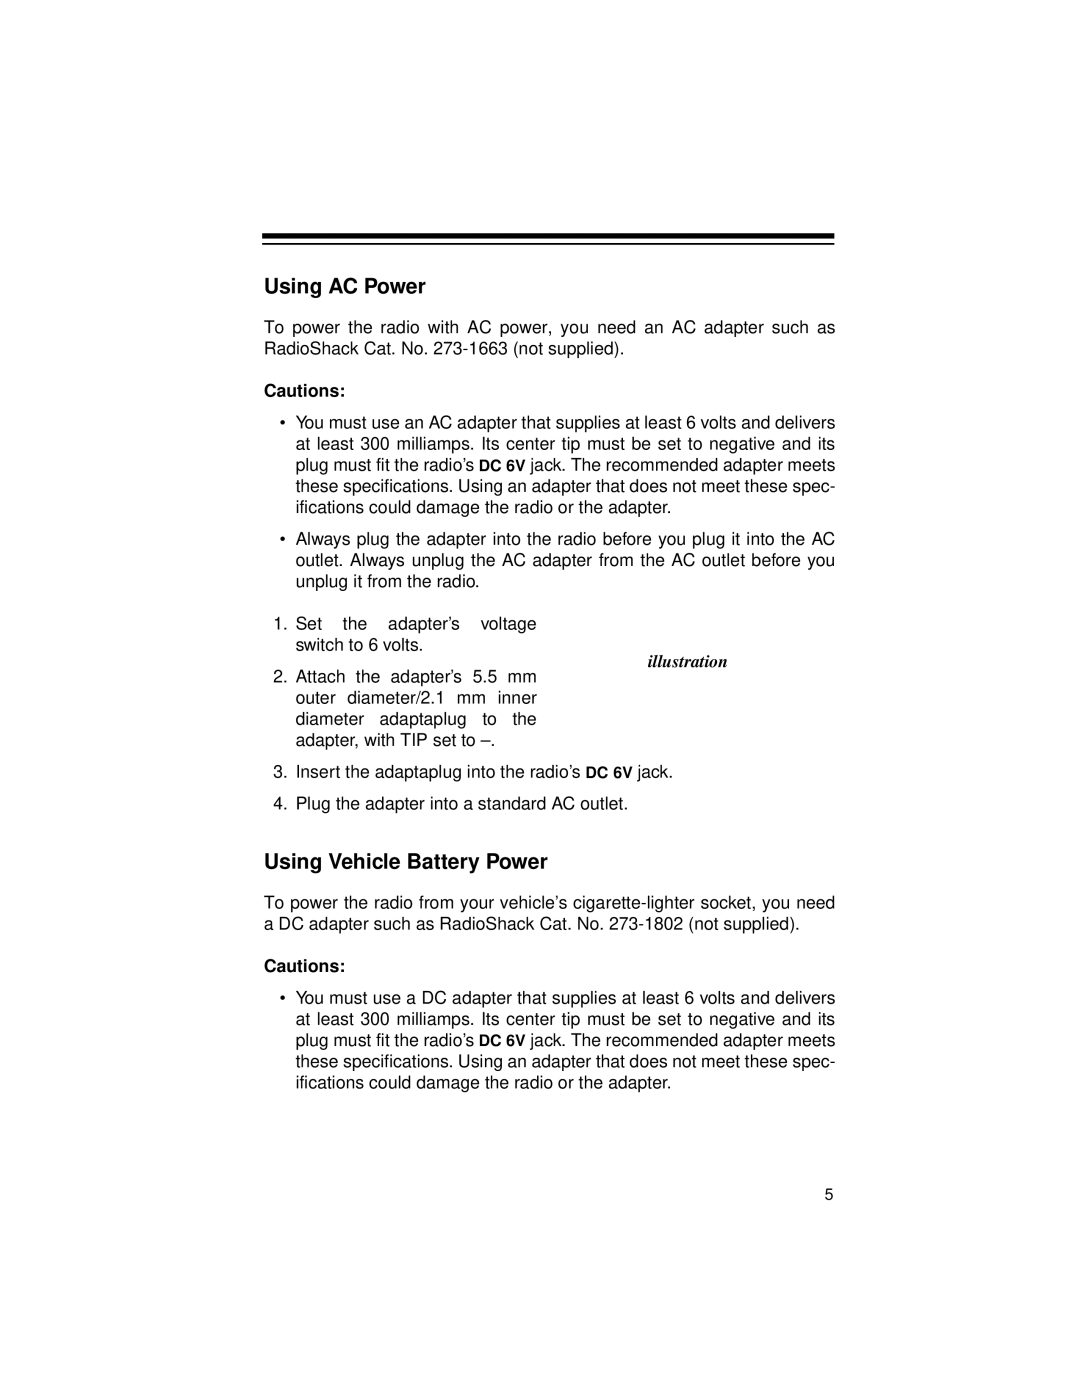 Radio Shack Radio owner manual Using AC Power, Using Vehicle Battery Power, Cautions, illustration 